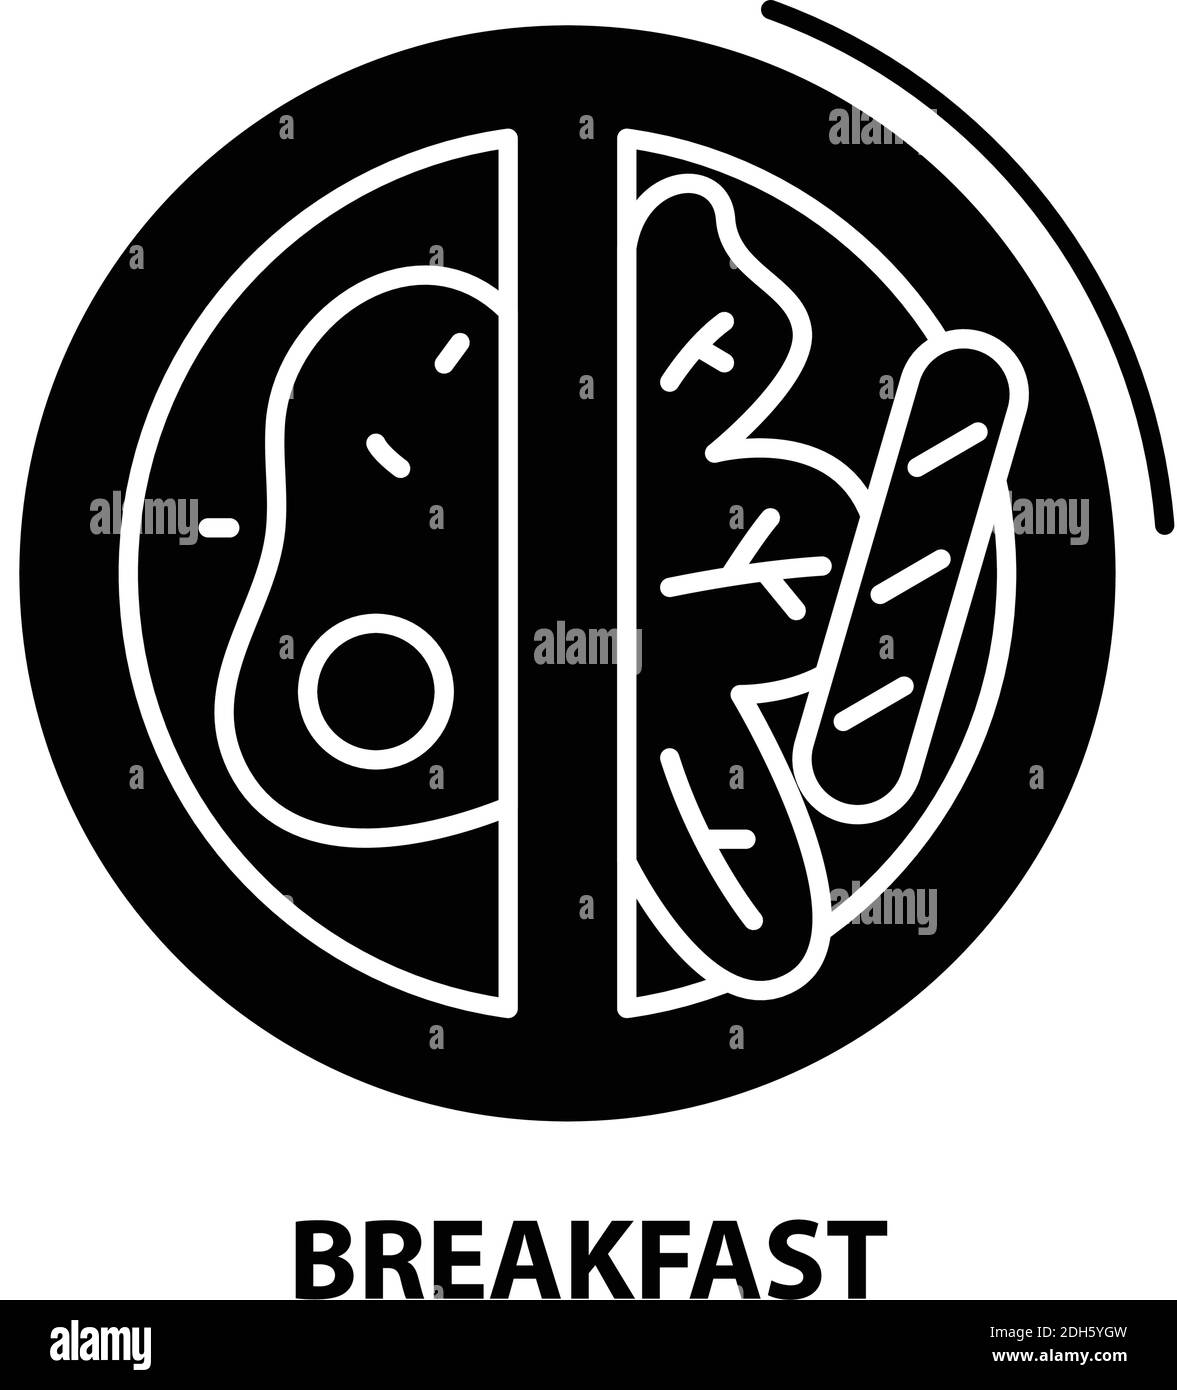 breakfast icon, black vector sign with editable strokes, concept illustration Stock Vector